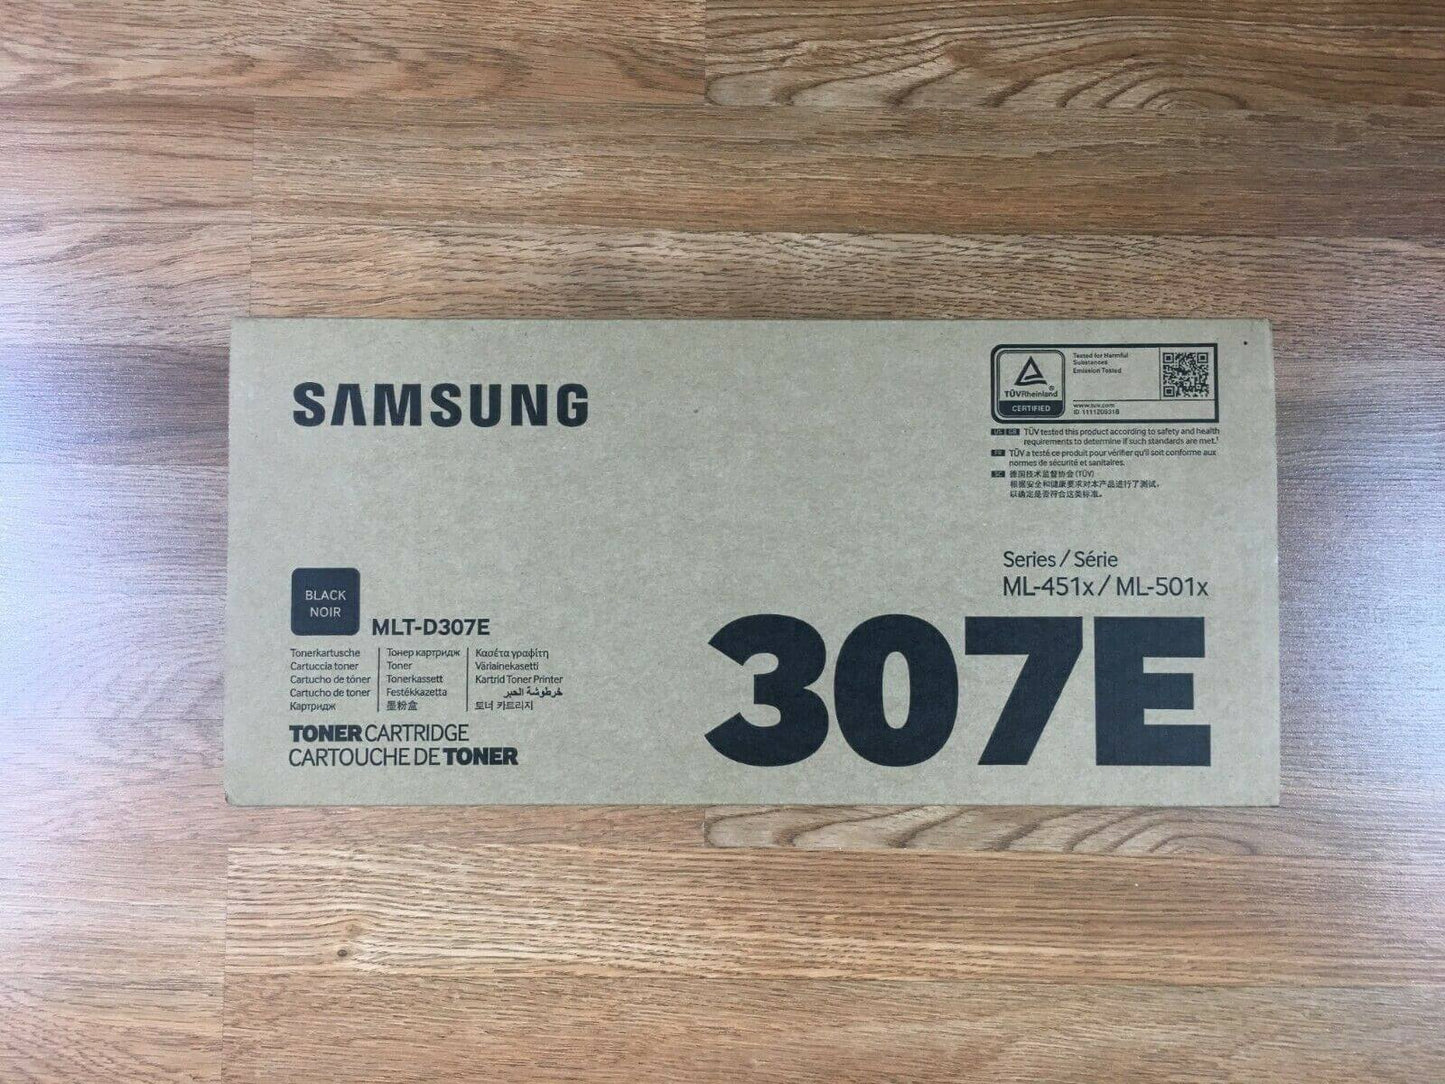 Genuine Samsung MLT-D307E Black For ML-451x And ML-501x FedEx 2Day Air!! - copier-clearance-center